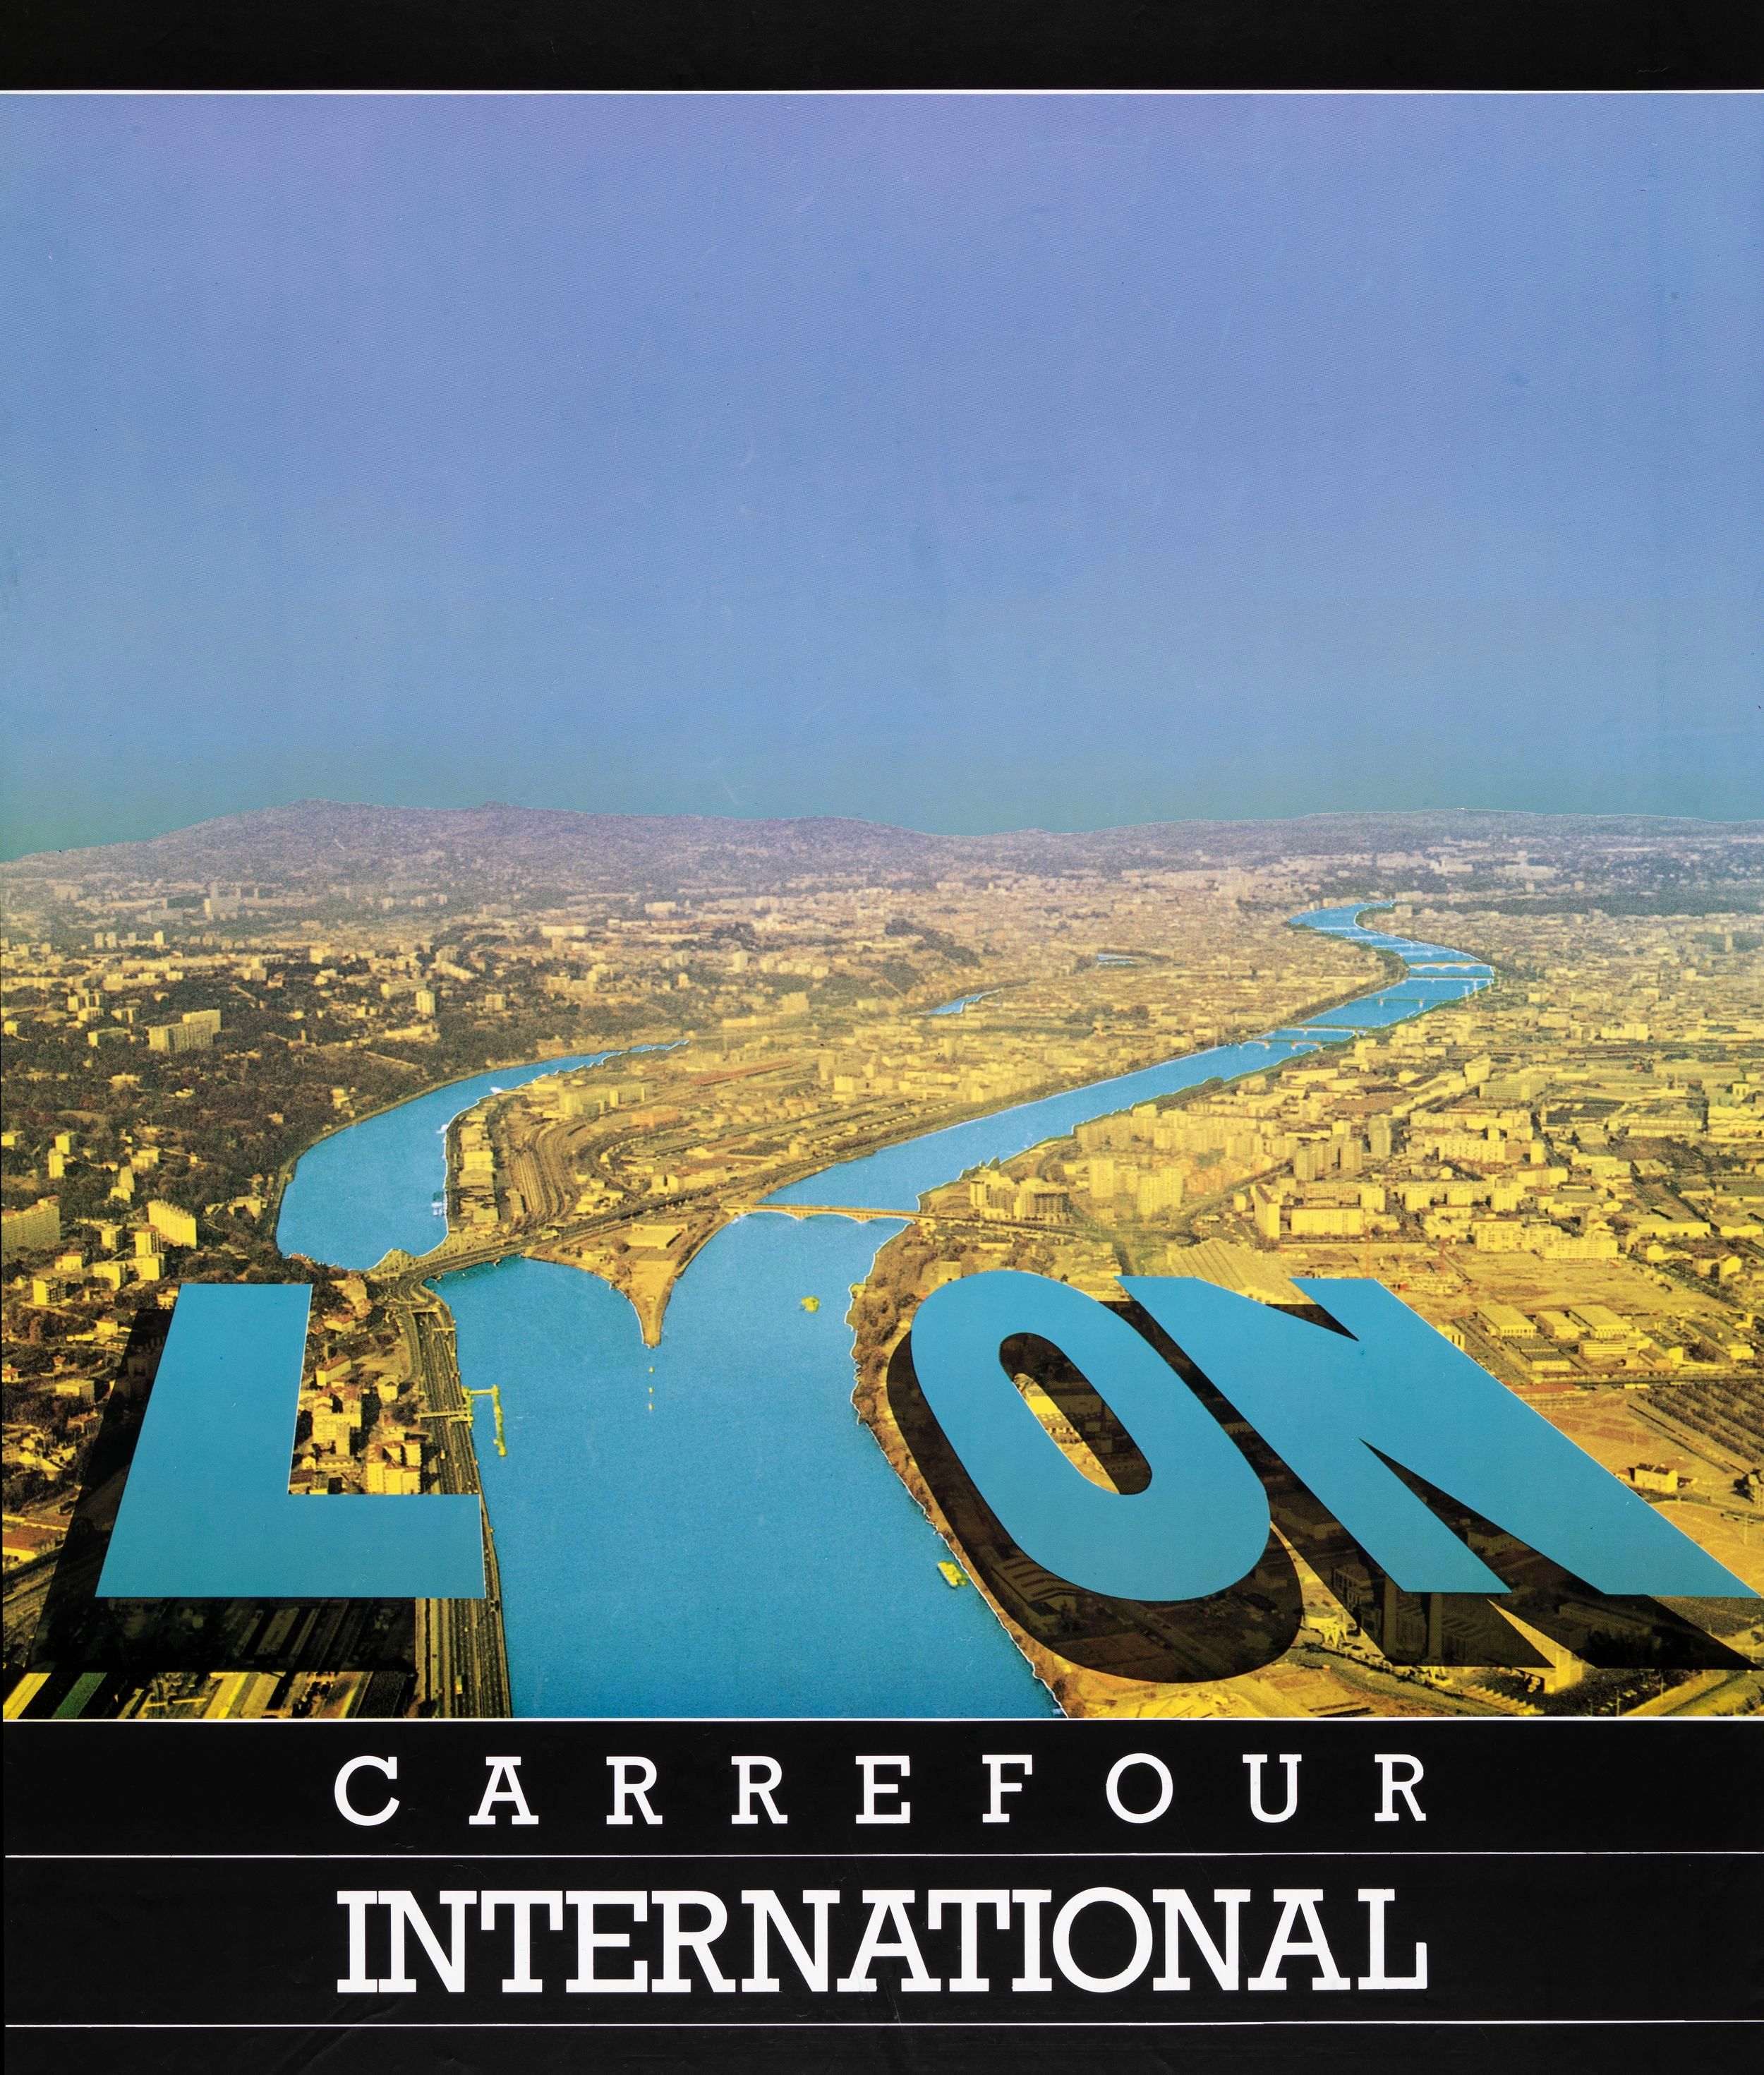 « Lyon carrefour international » : affiche couleur anonyme (1987, cote 7FI/2478)